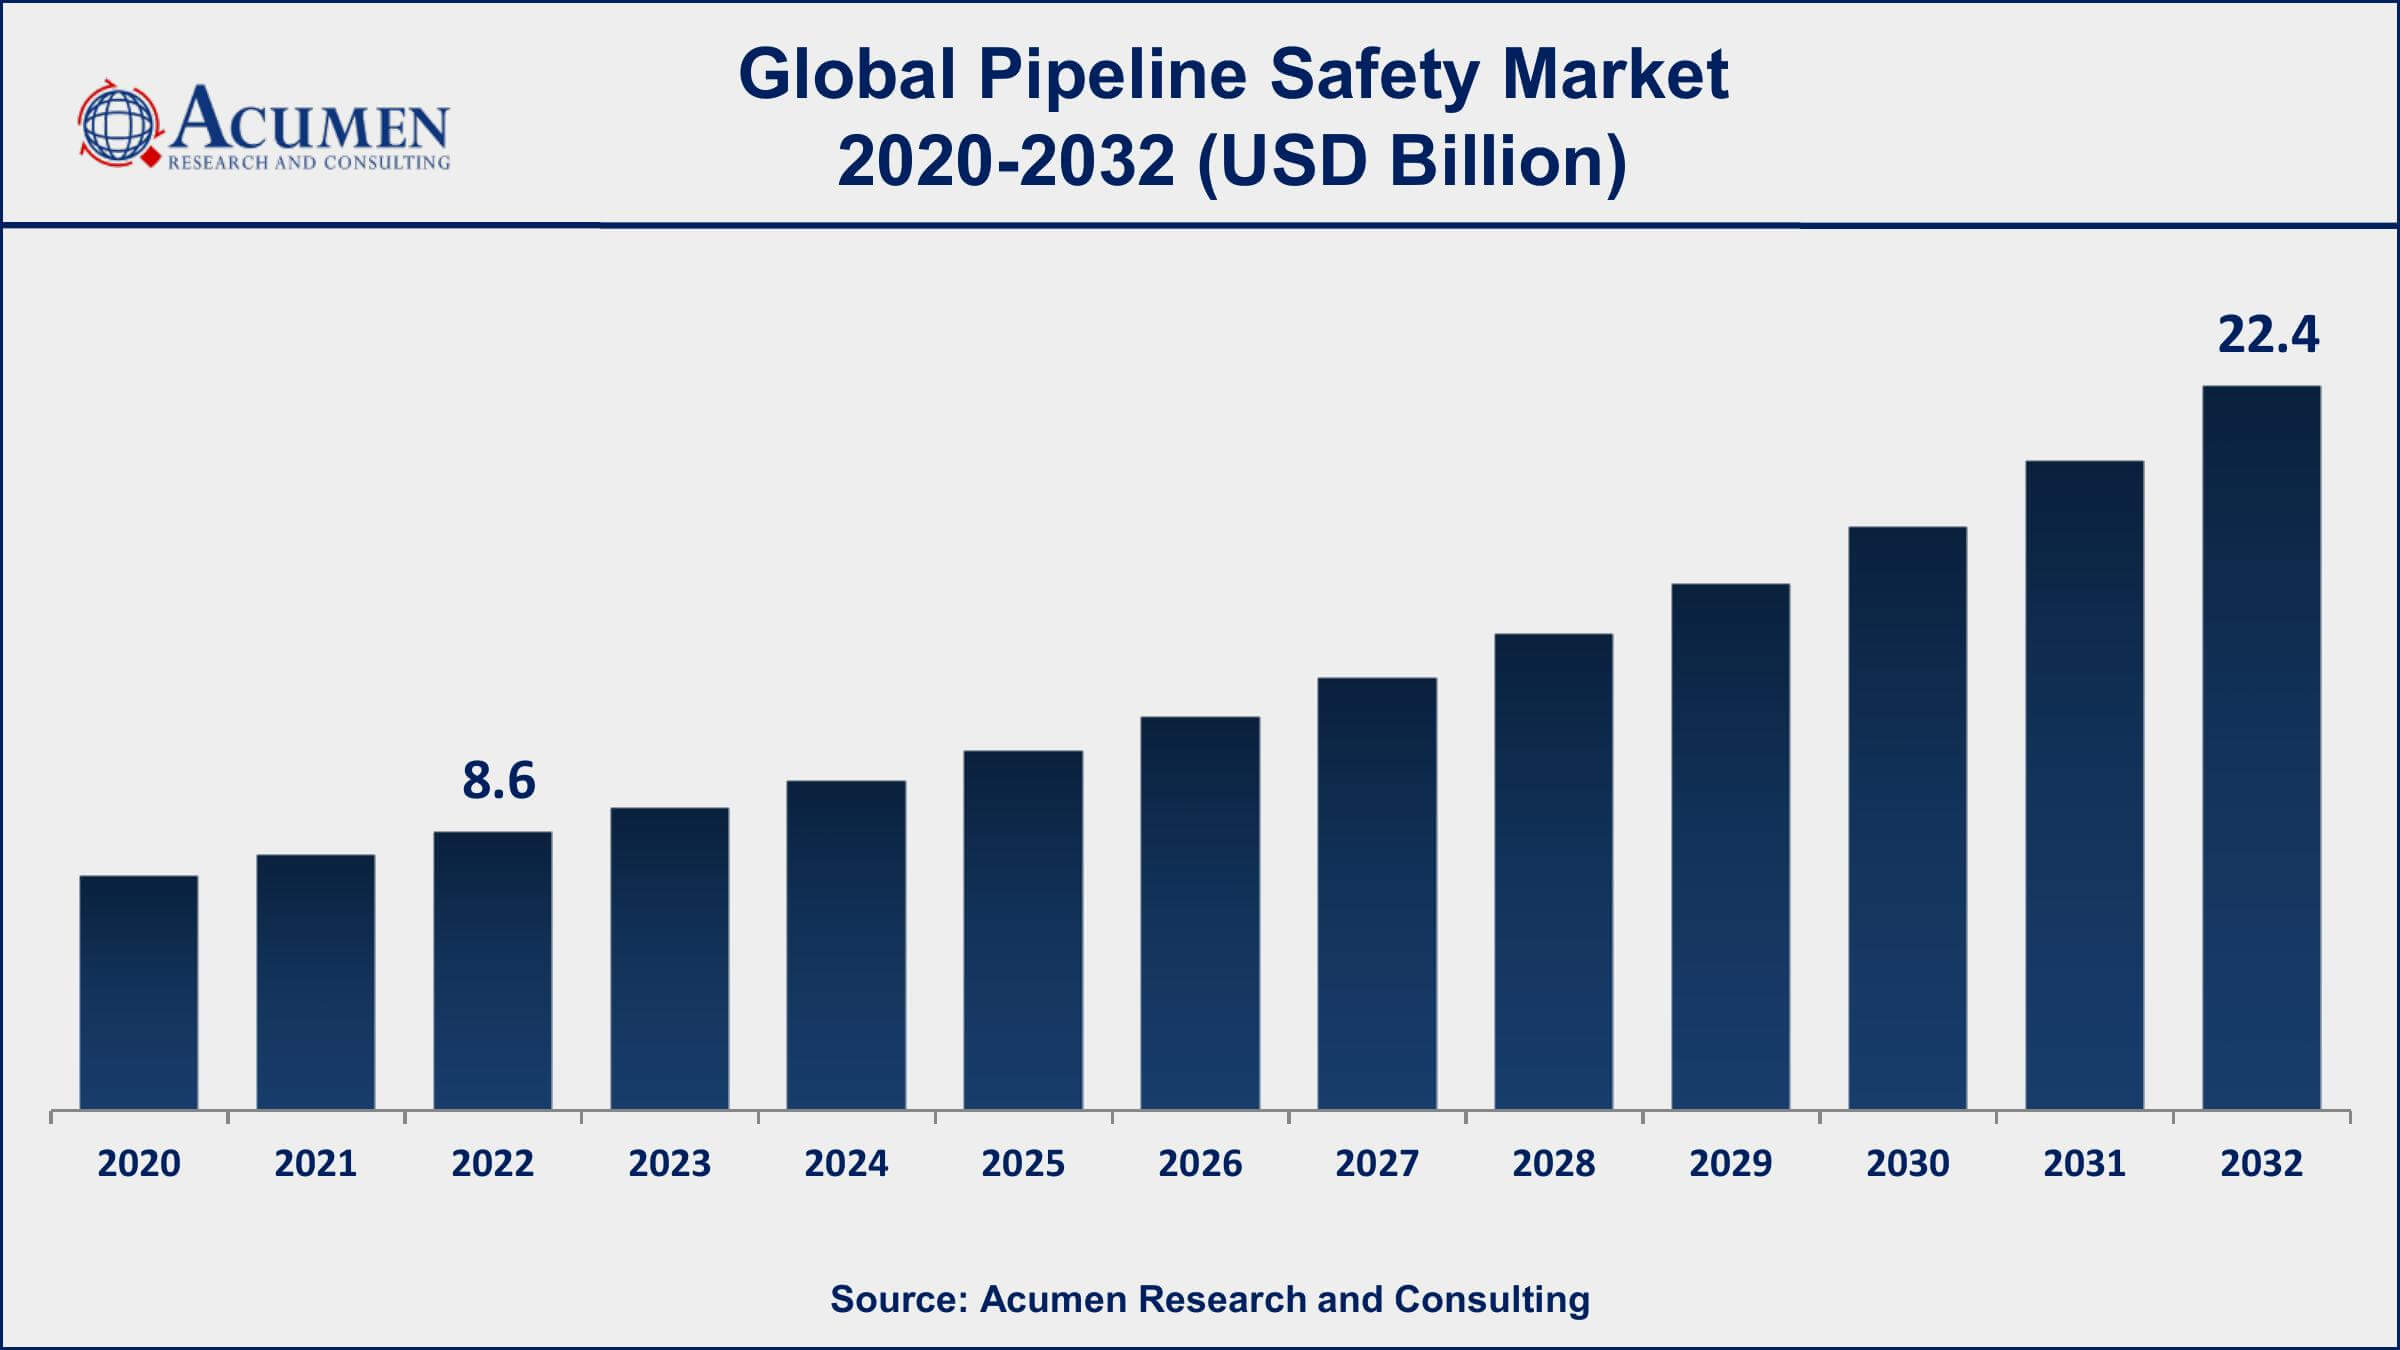 Pipeline Safety Market Forecast Data